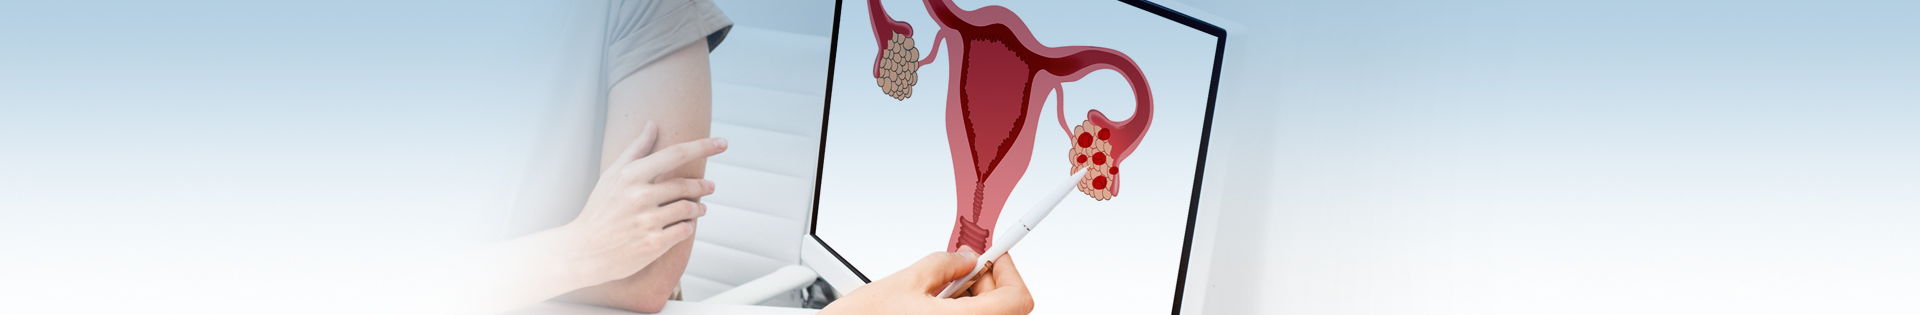 Endometriomas: conheça os sintomas